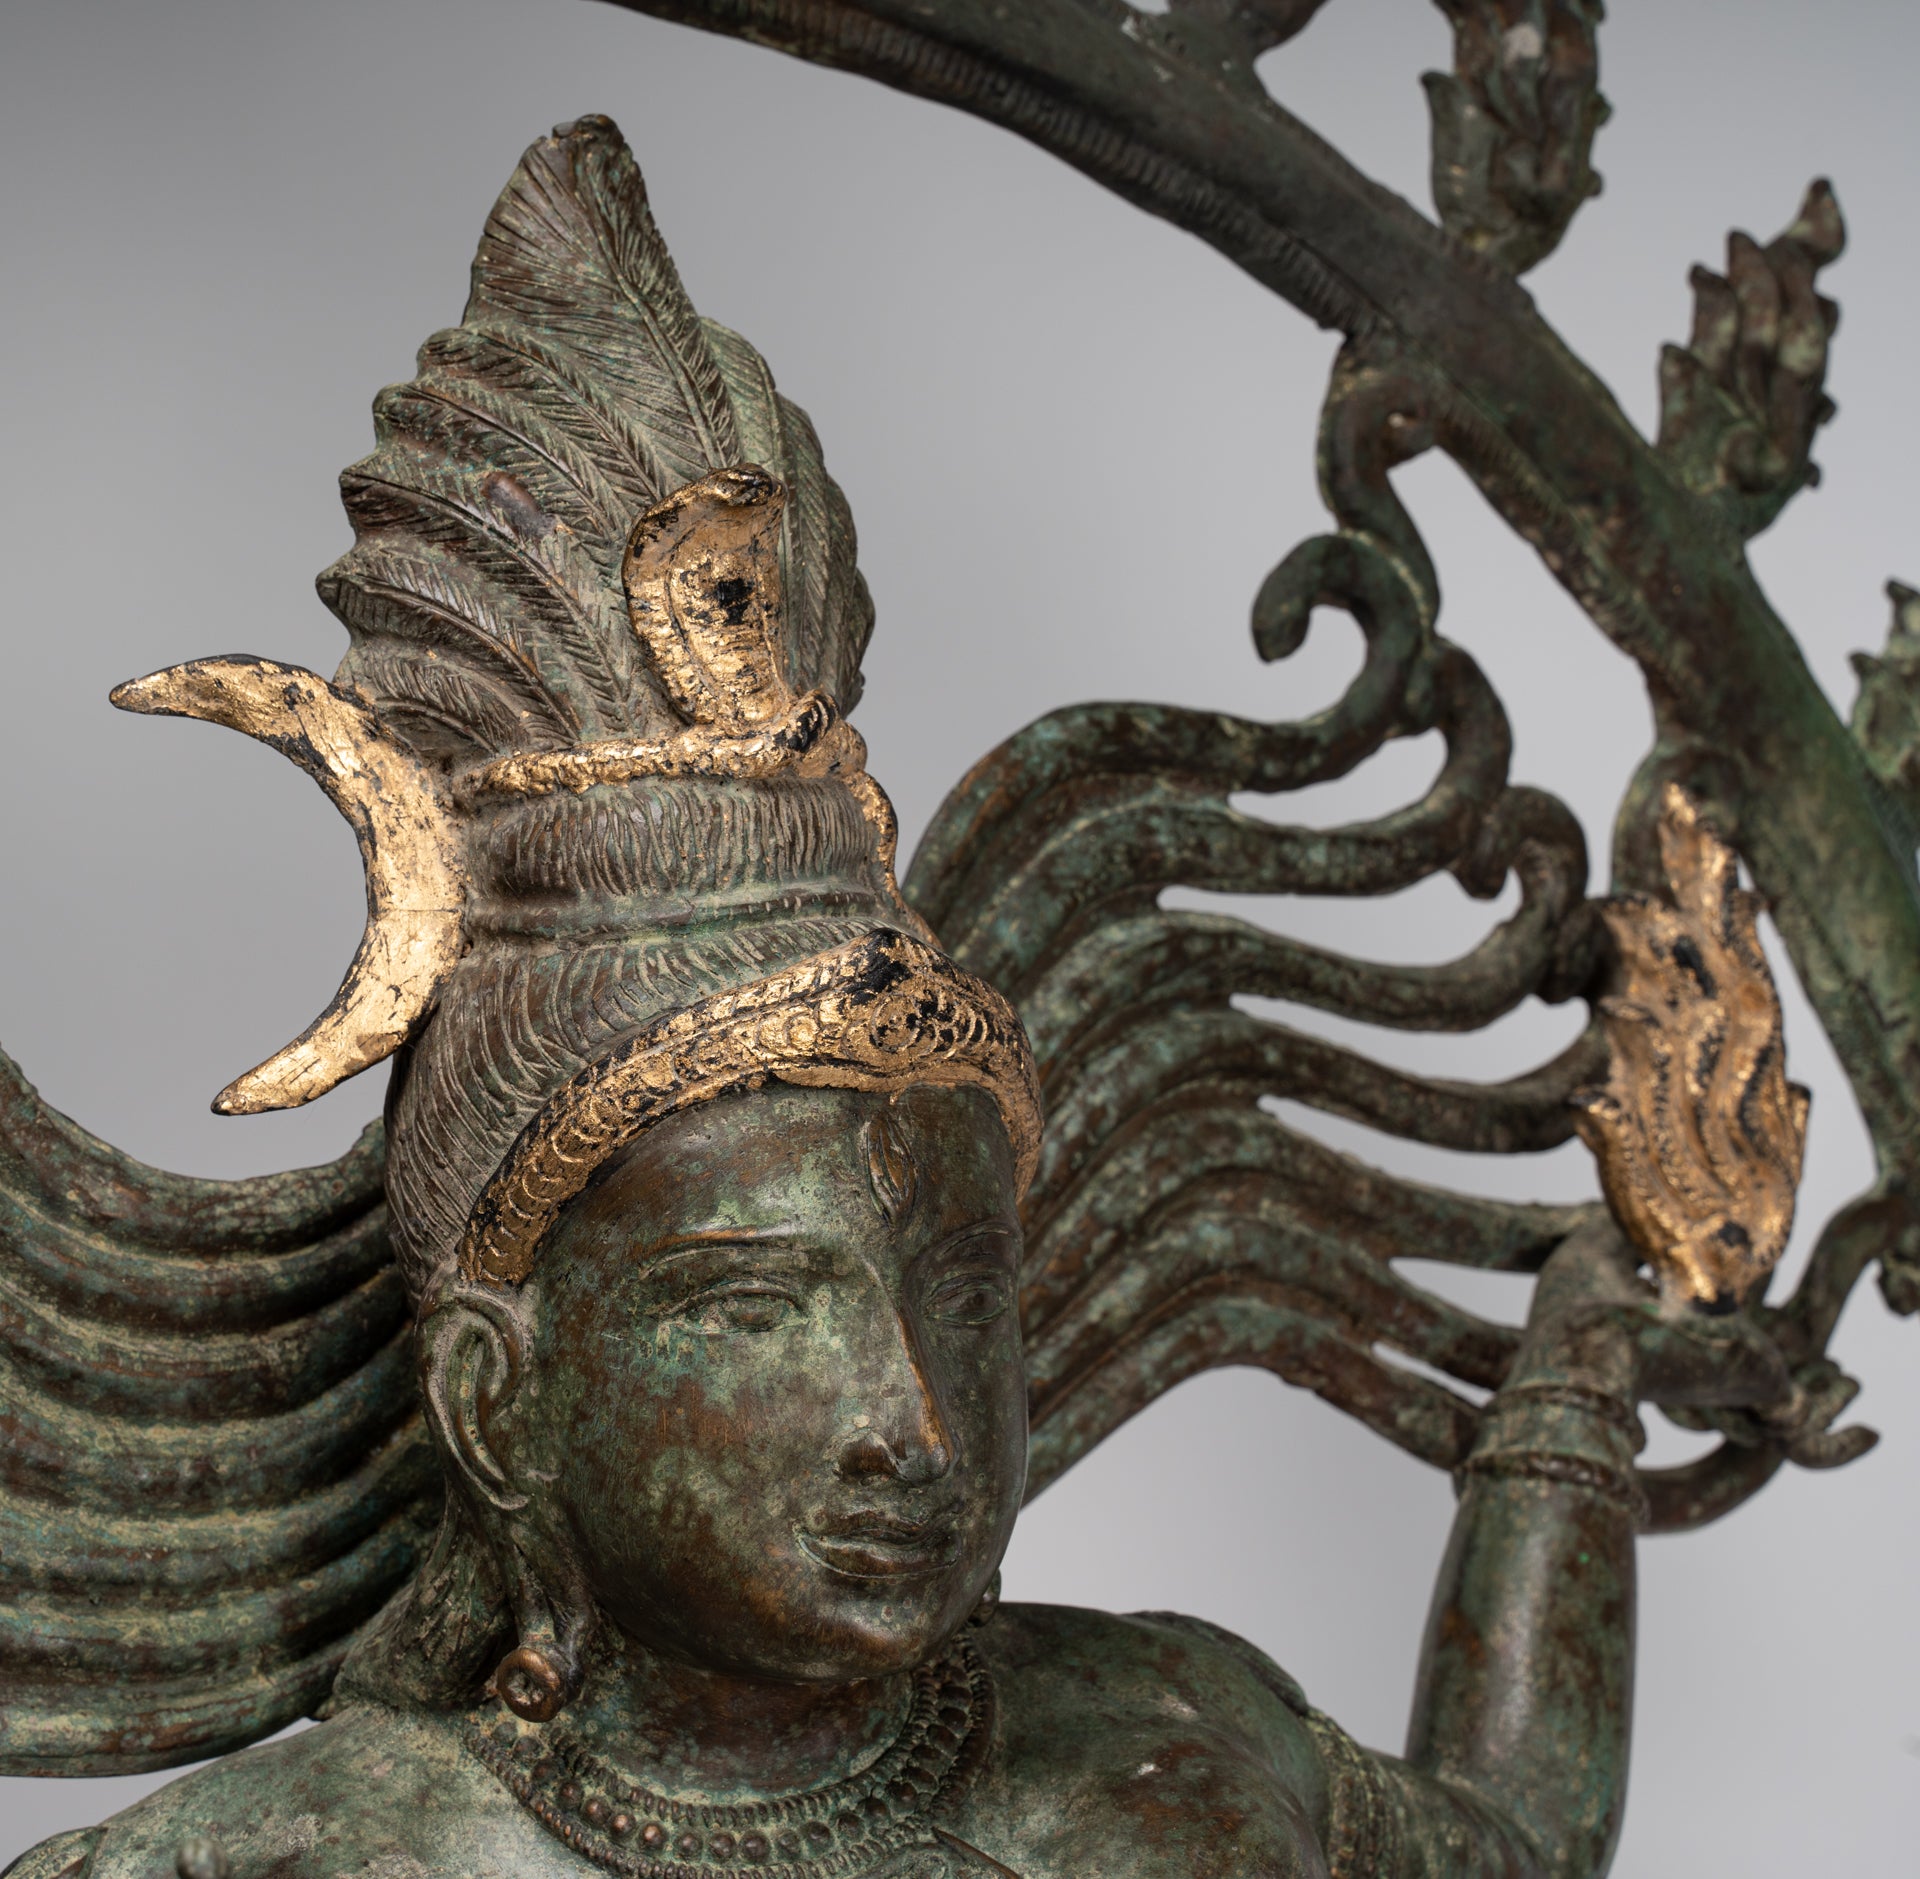 Dancing Shiva Nataraja Statue